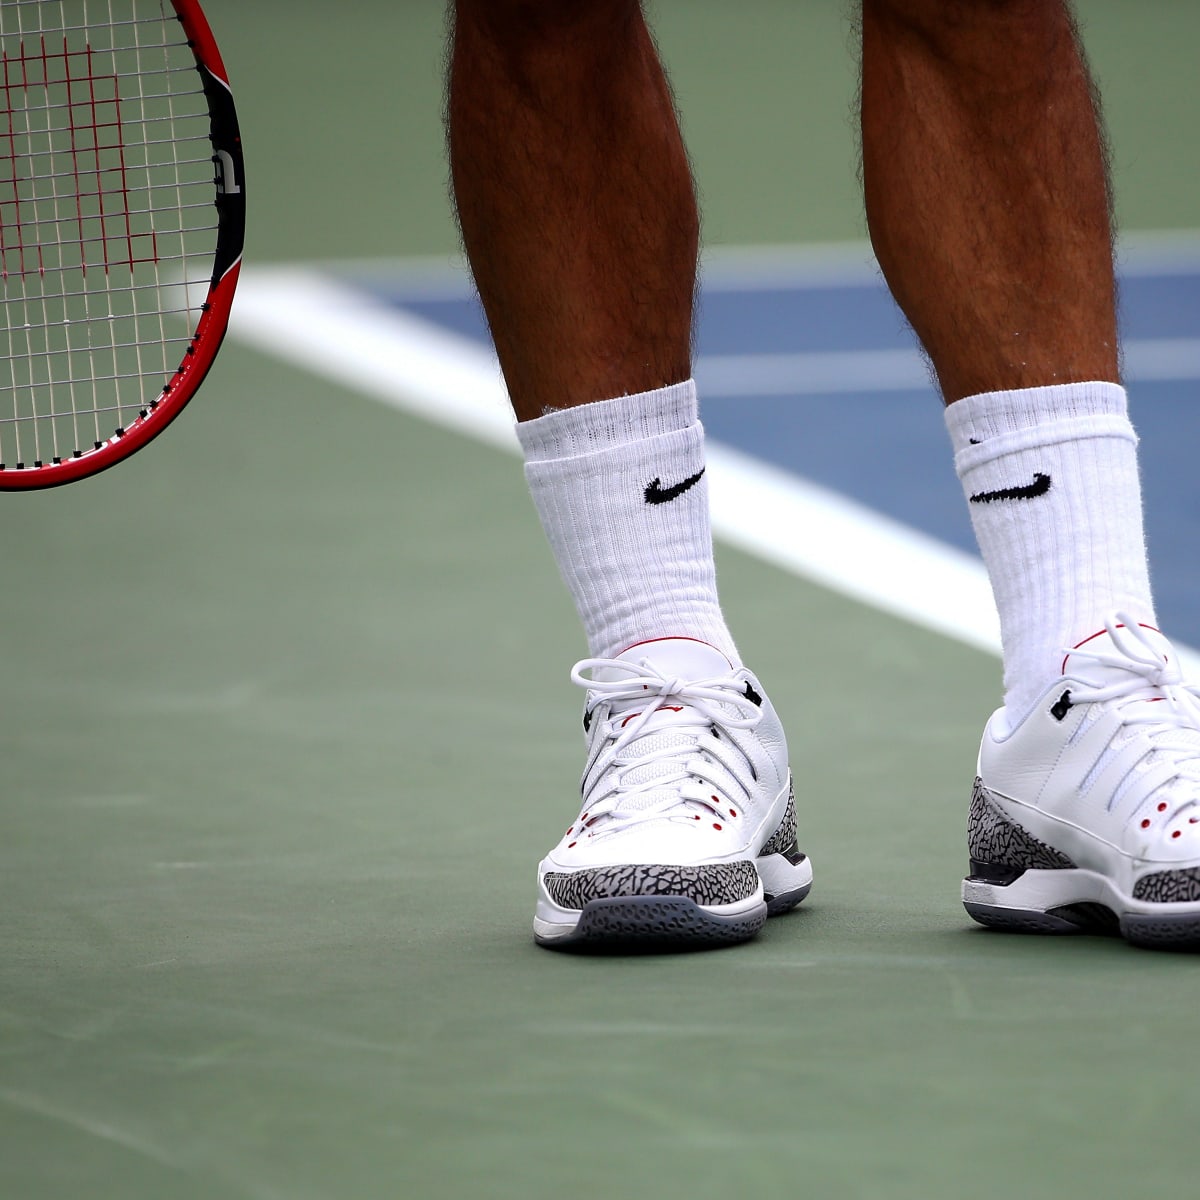 Erholung Vermuten zäh nike tennis players all time Instrument Bein Intensiv